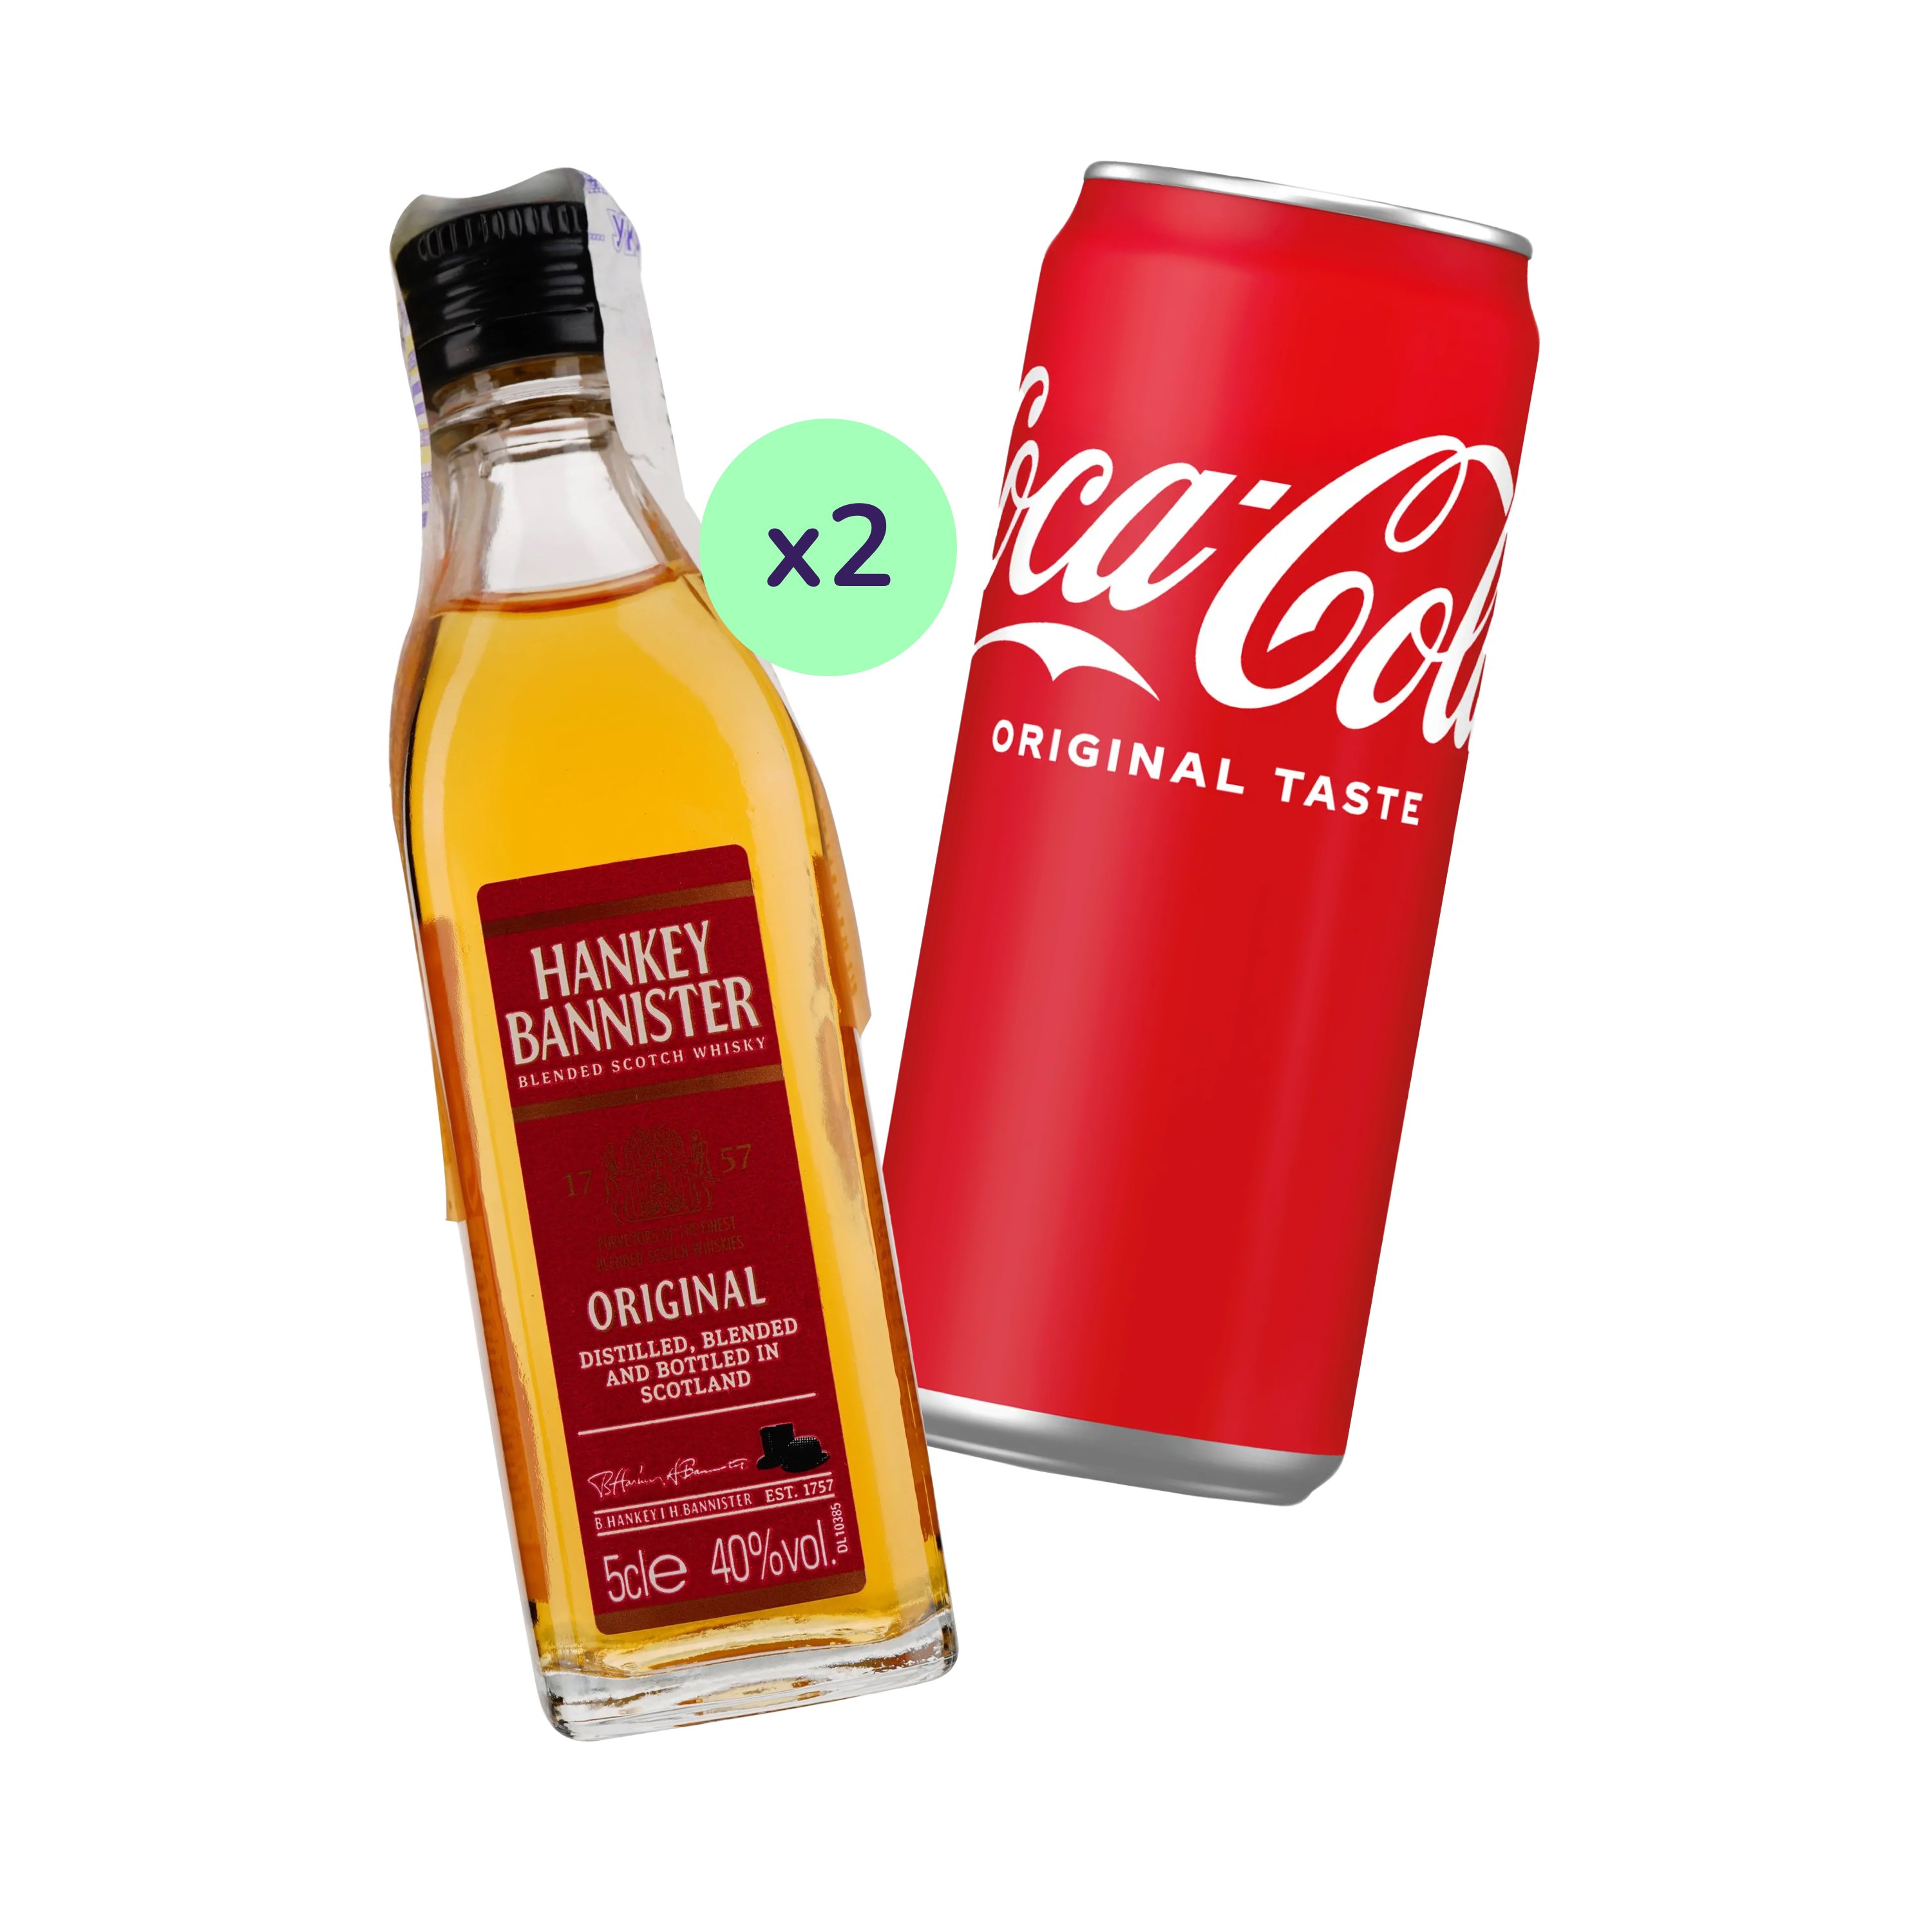 Коктейль Whisky Cola (набір інгредієнтів) х2 на основі Hankey Bannister - фото 2